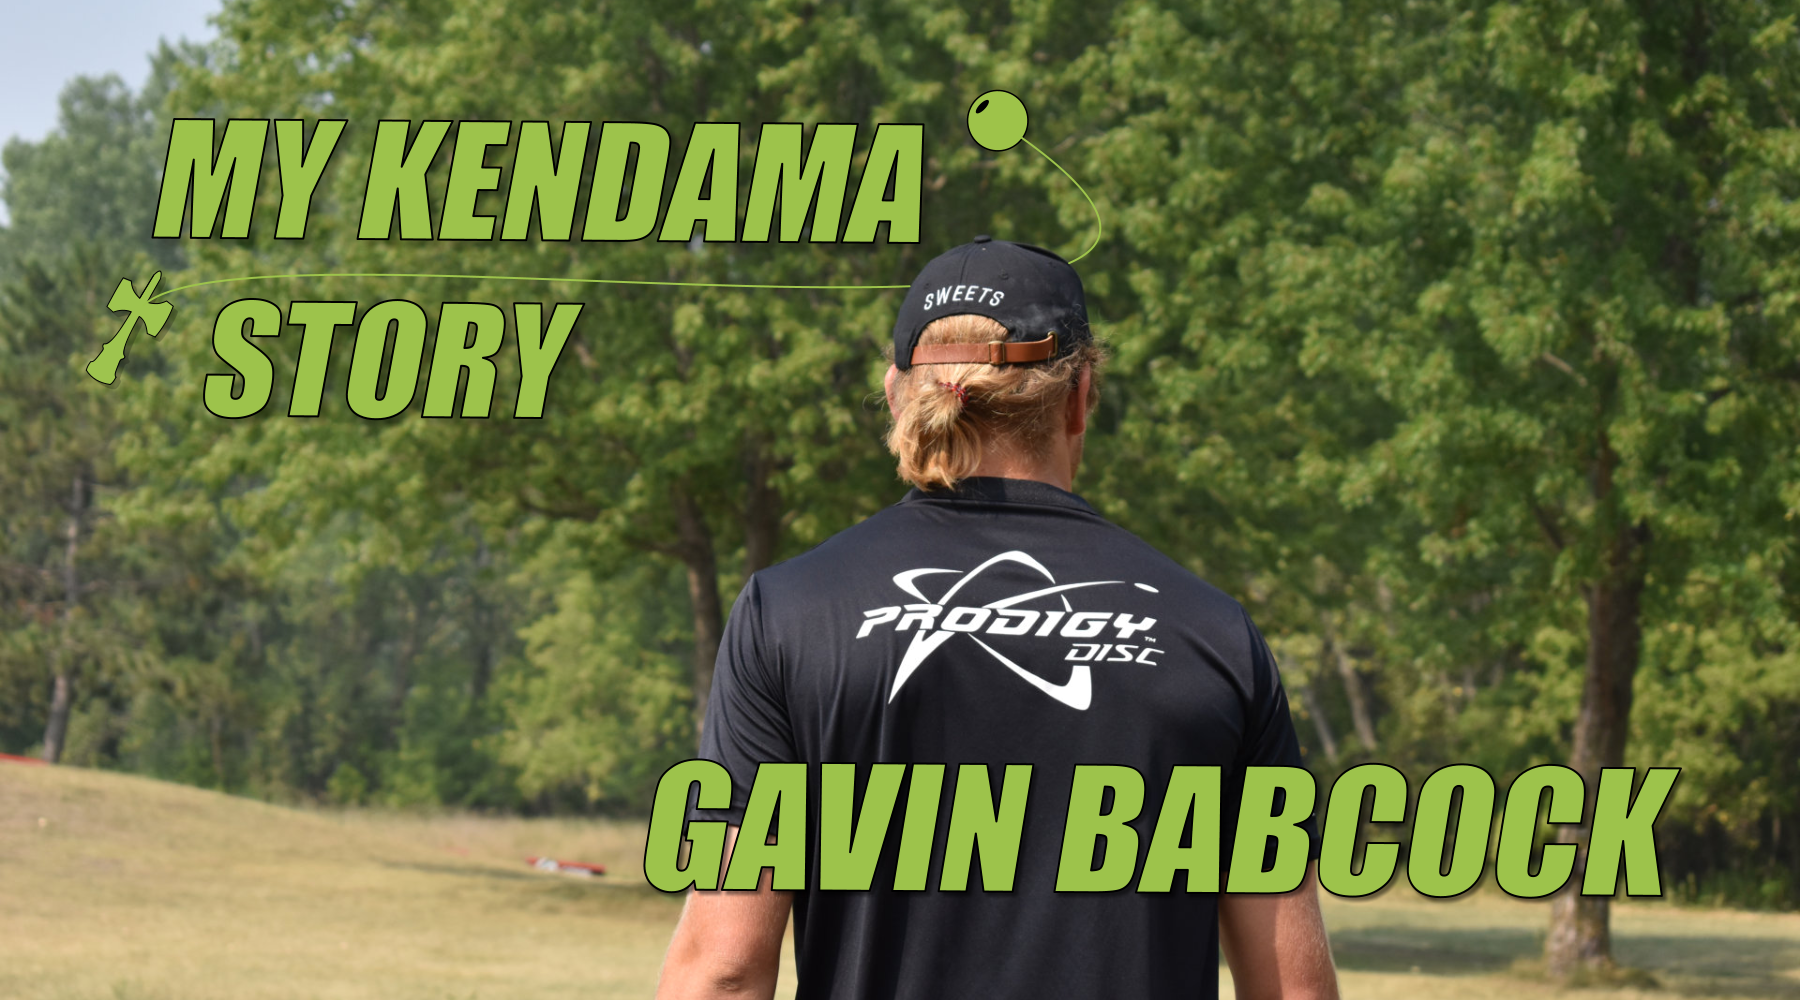 My Kendama Story - Gavin Babcock